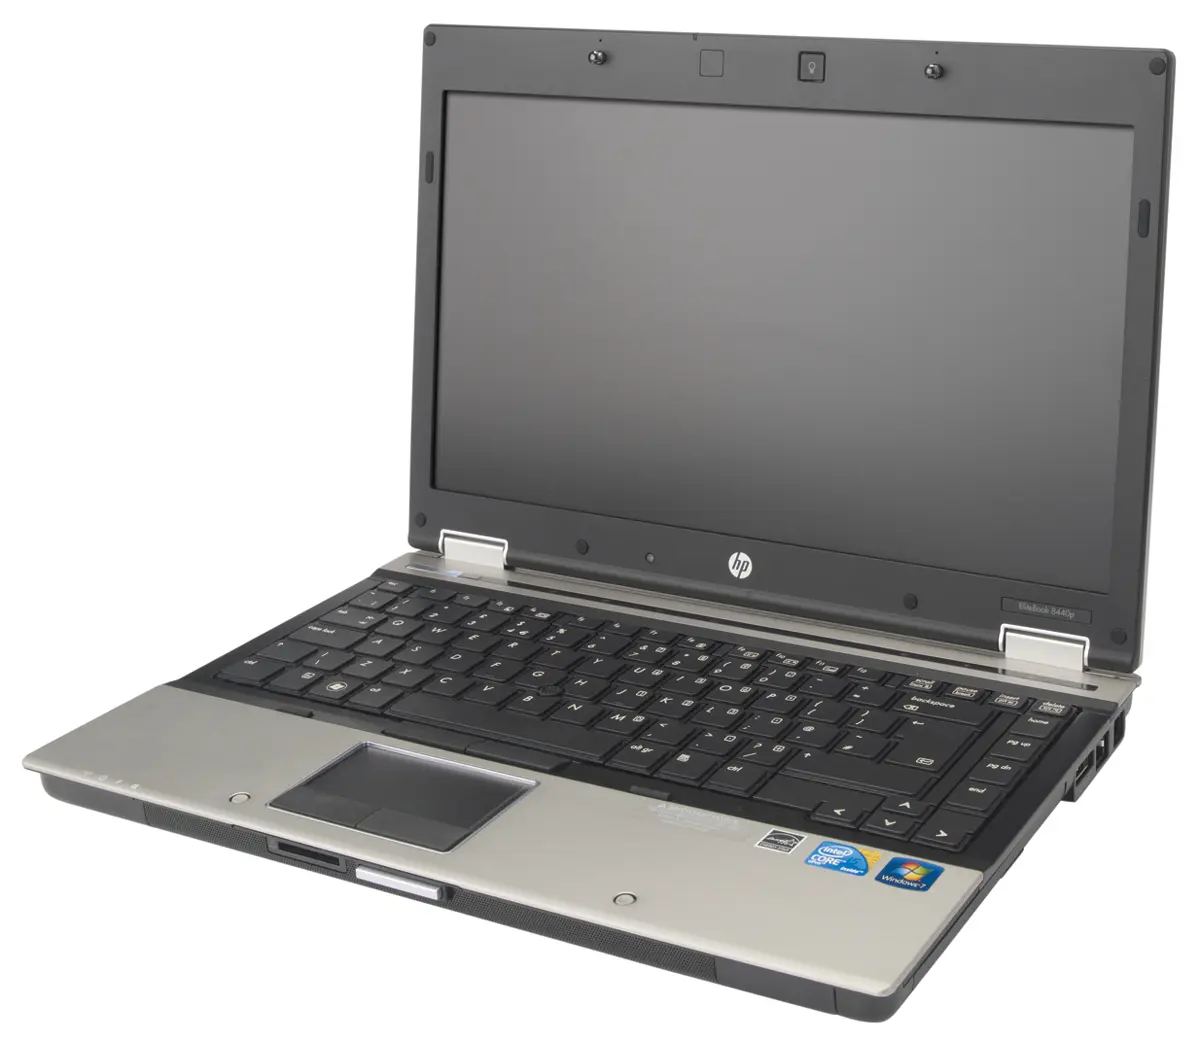 hewlett packard 8440p review - How long does HP EliteBook 8440p battery last